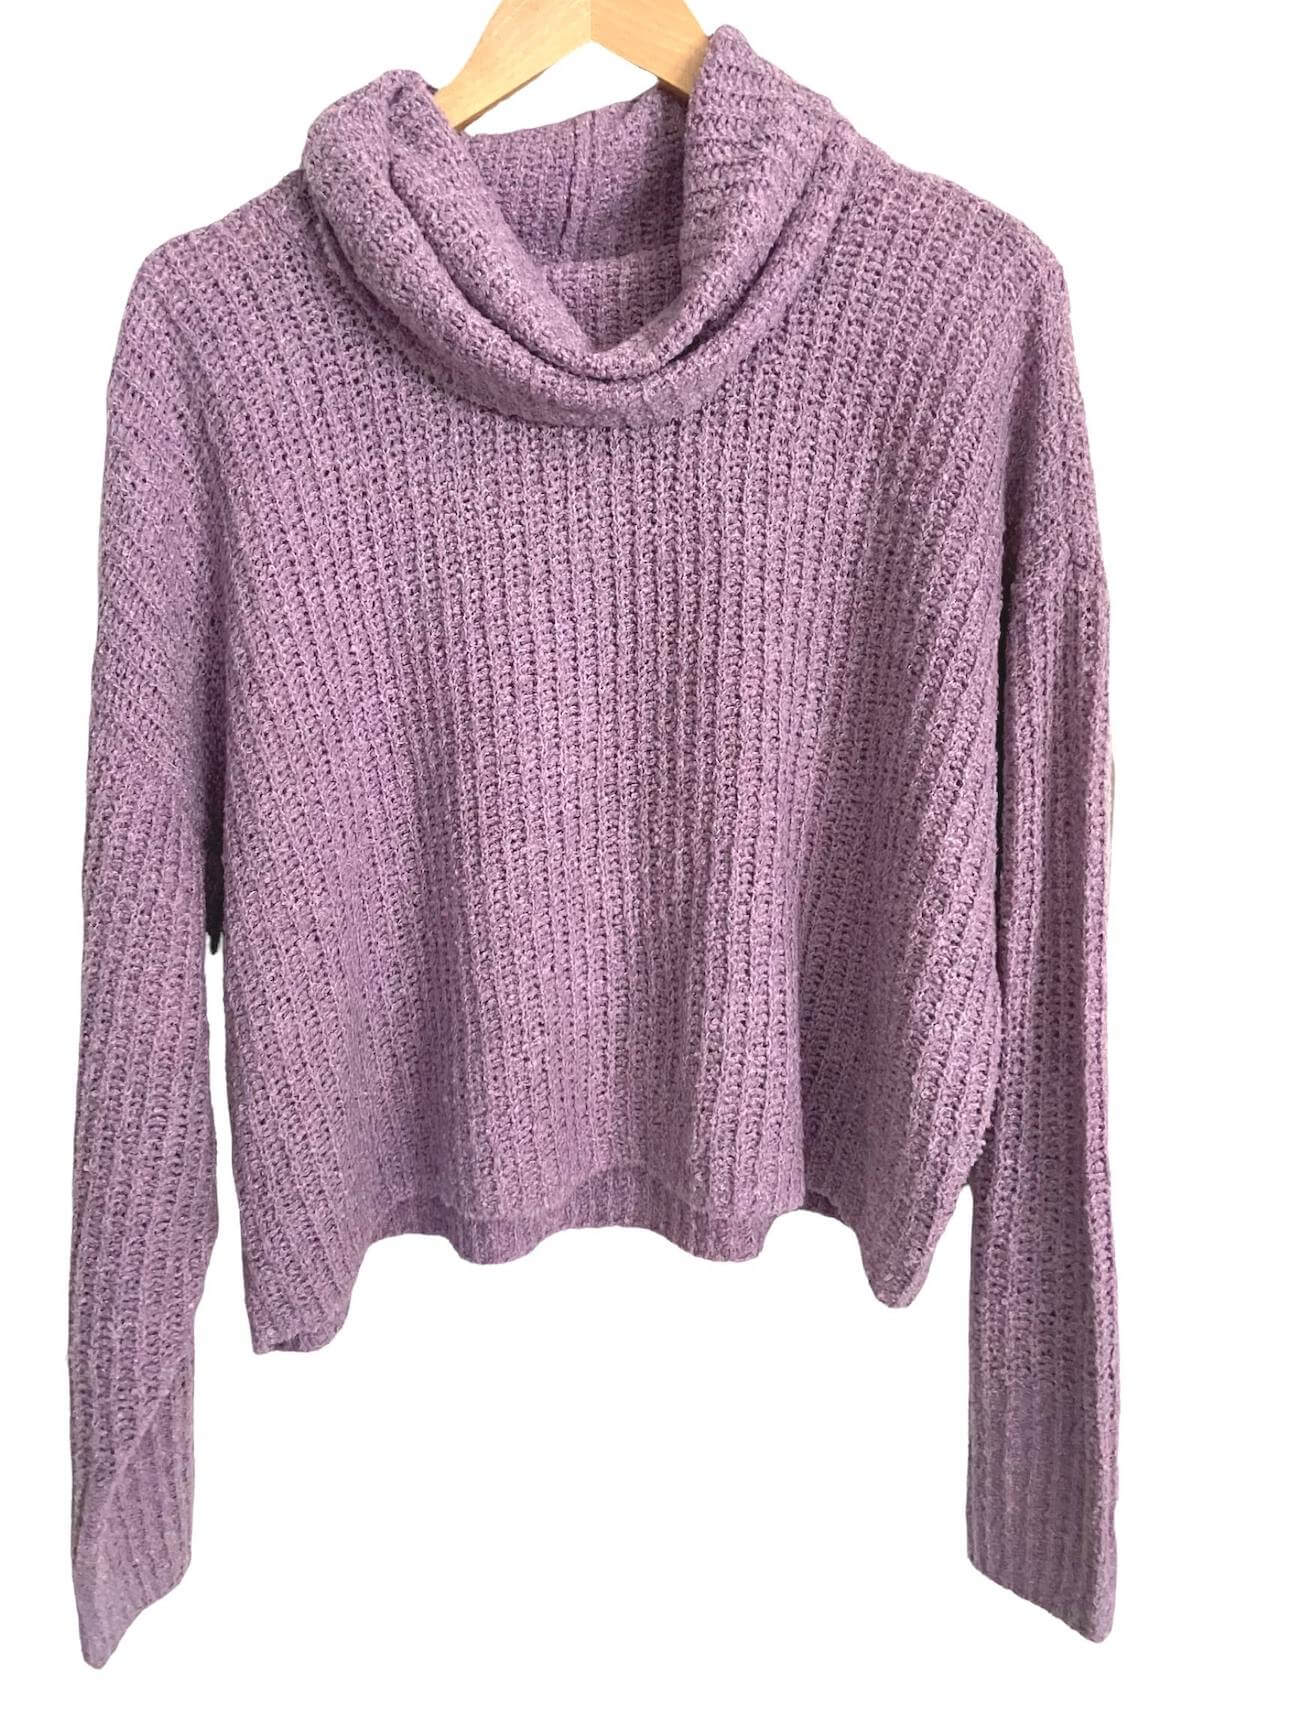 Soft Autumn EXPRESS wisteria purple cowl neck crop sweater